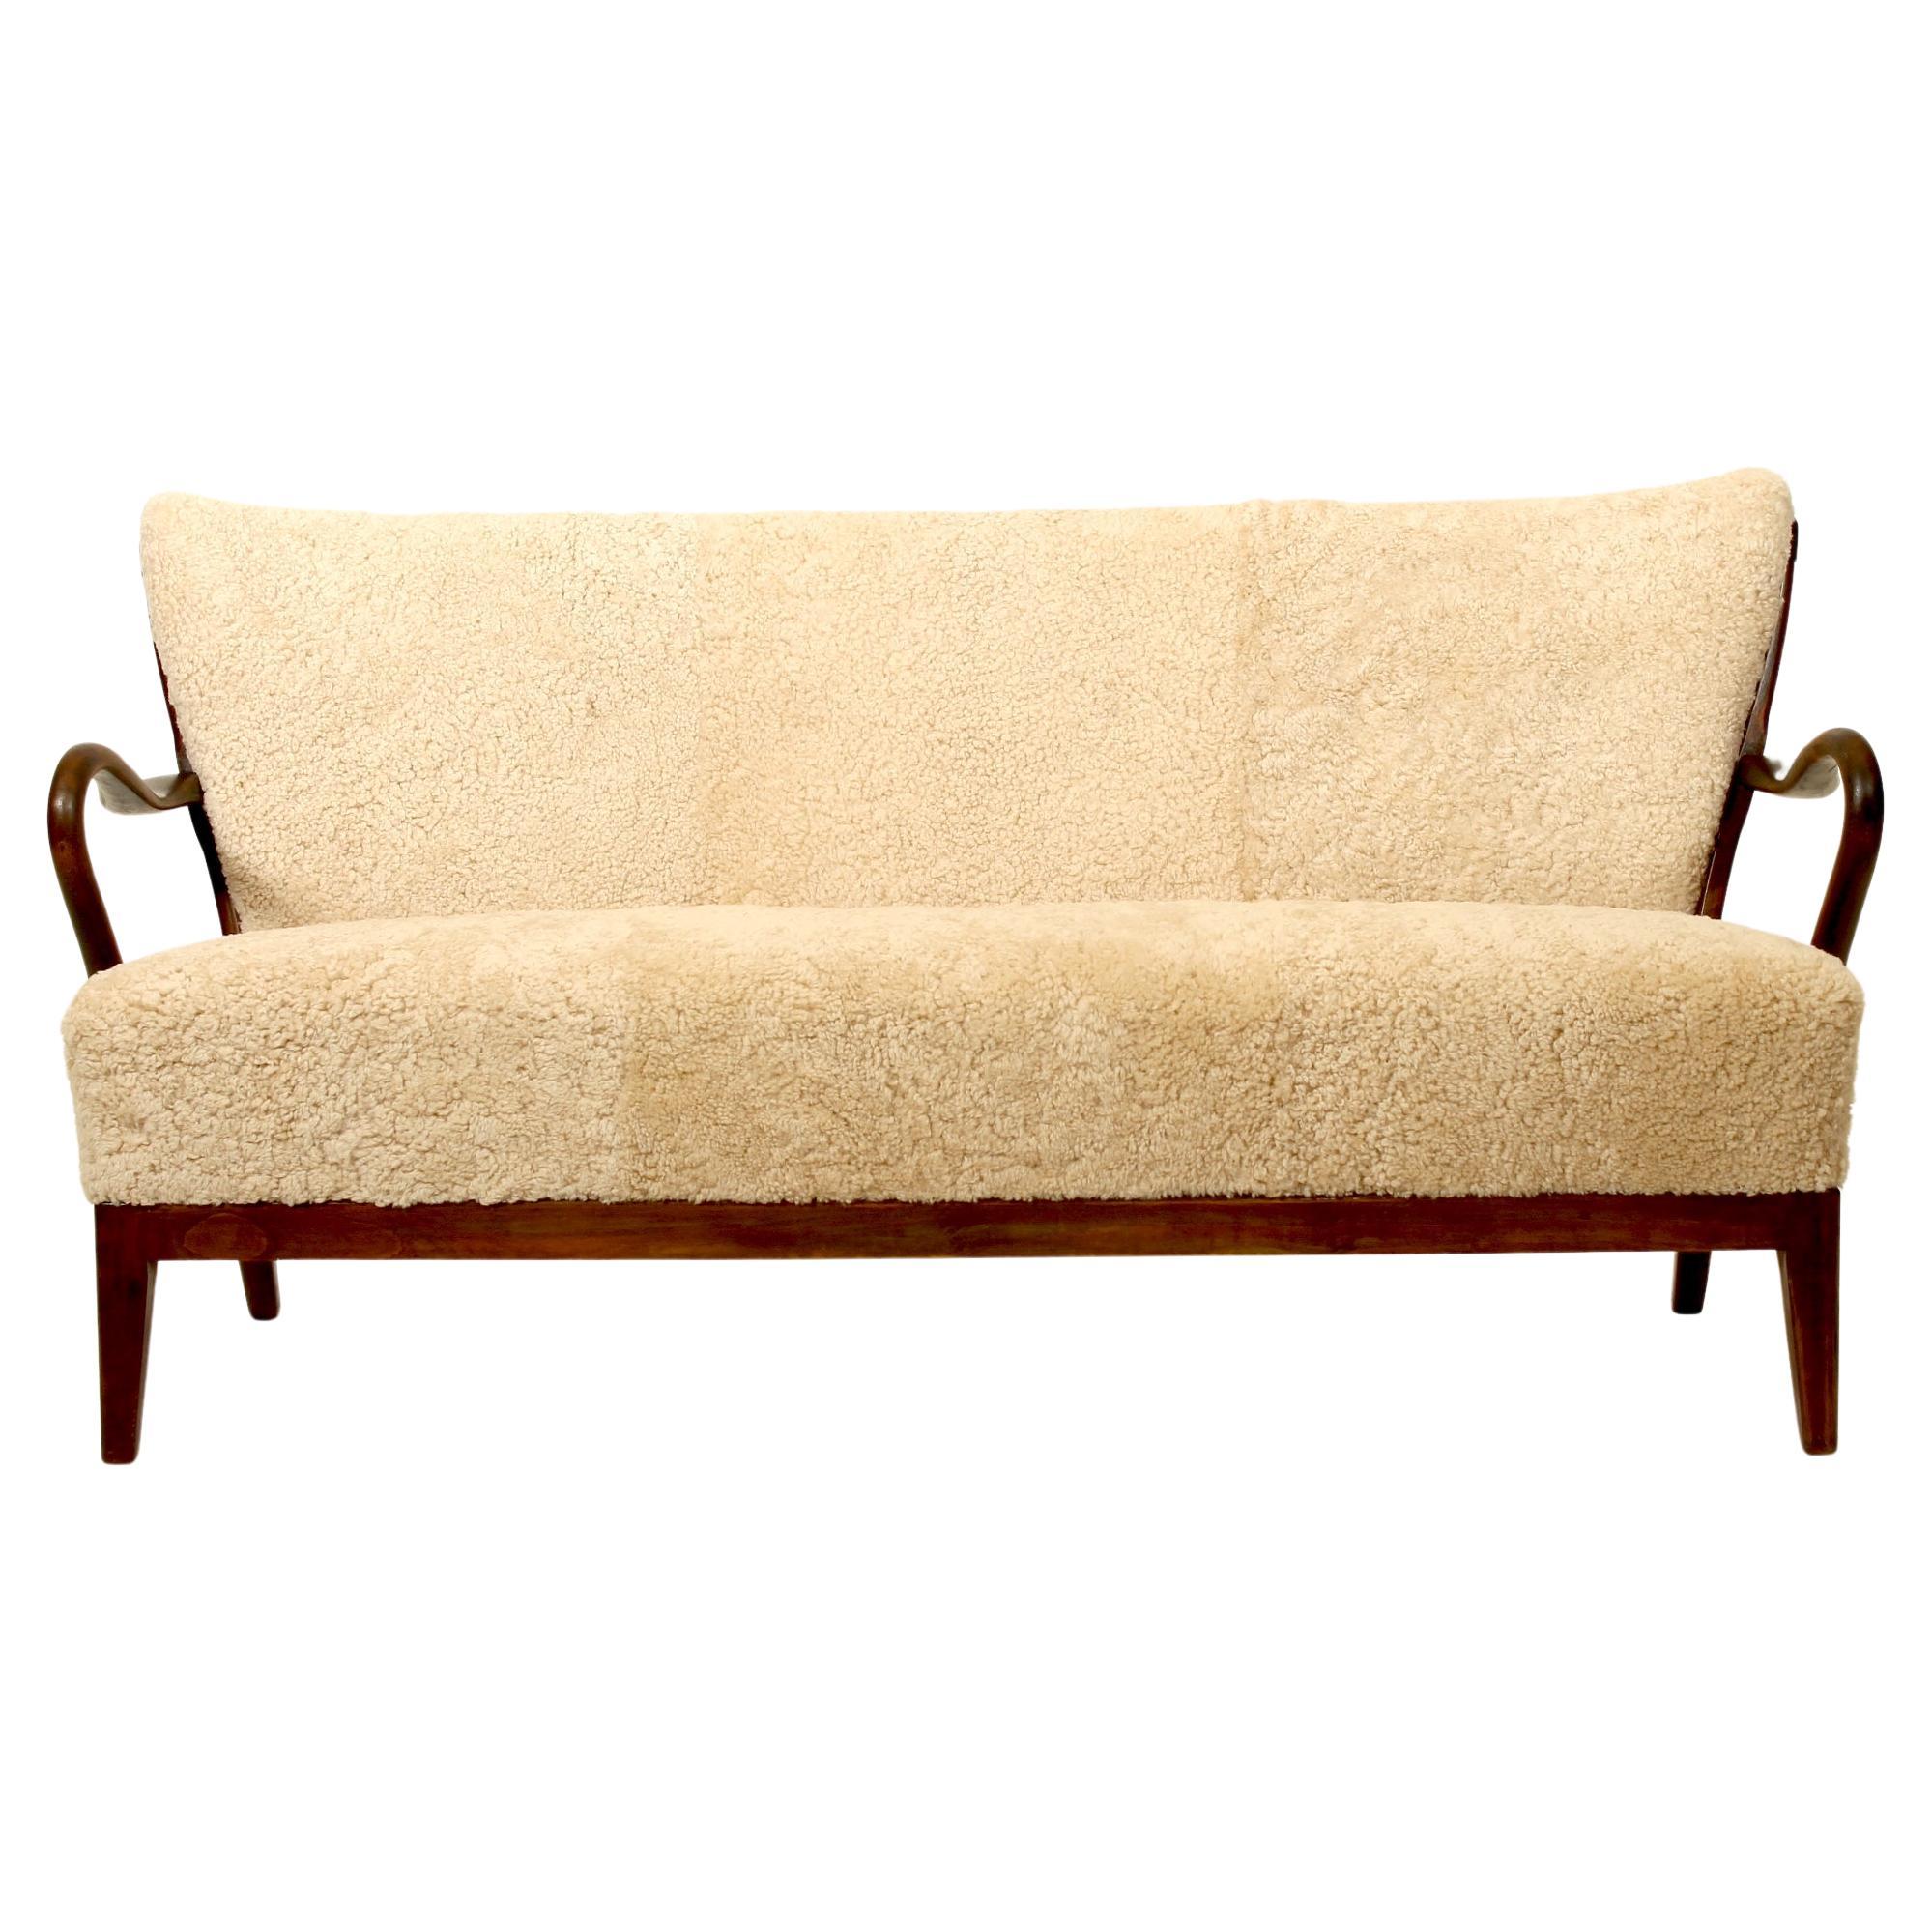 Original sofa in beech by Alfred Christensen, Denmark. For Sale